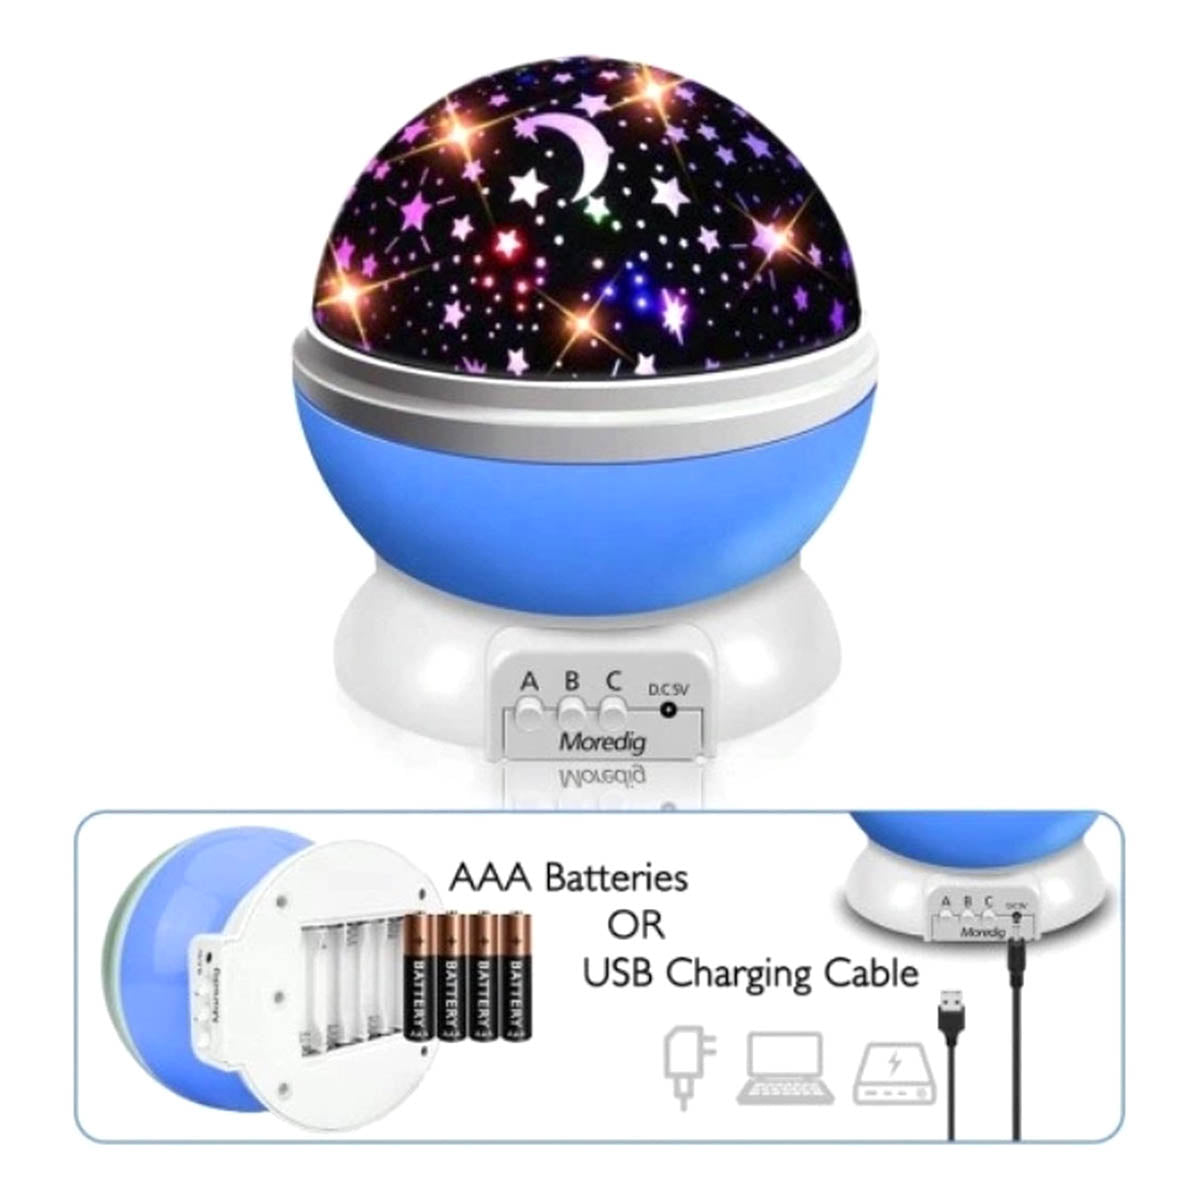 <tc>Ariko</tc> Rotating Star Projector Starry Sky - Night Light Baby/Child - Projection Lamp - Children's Room - Night Light - Blue